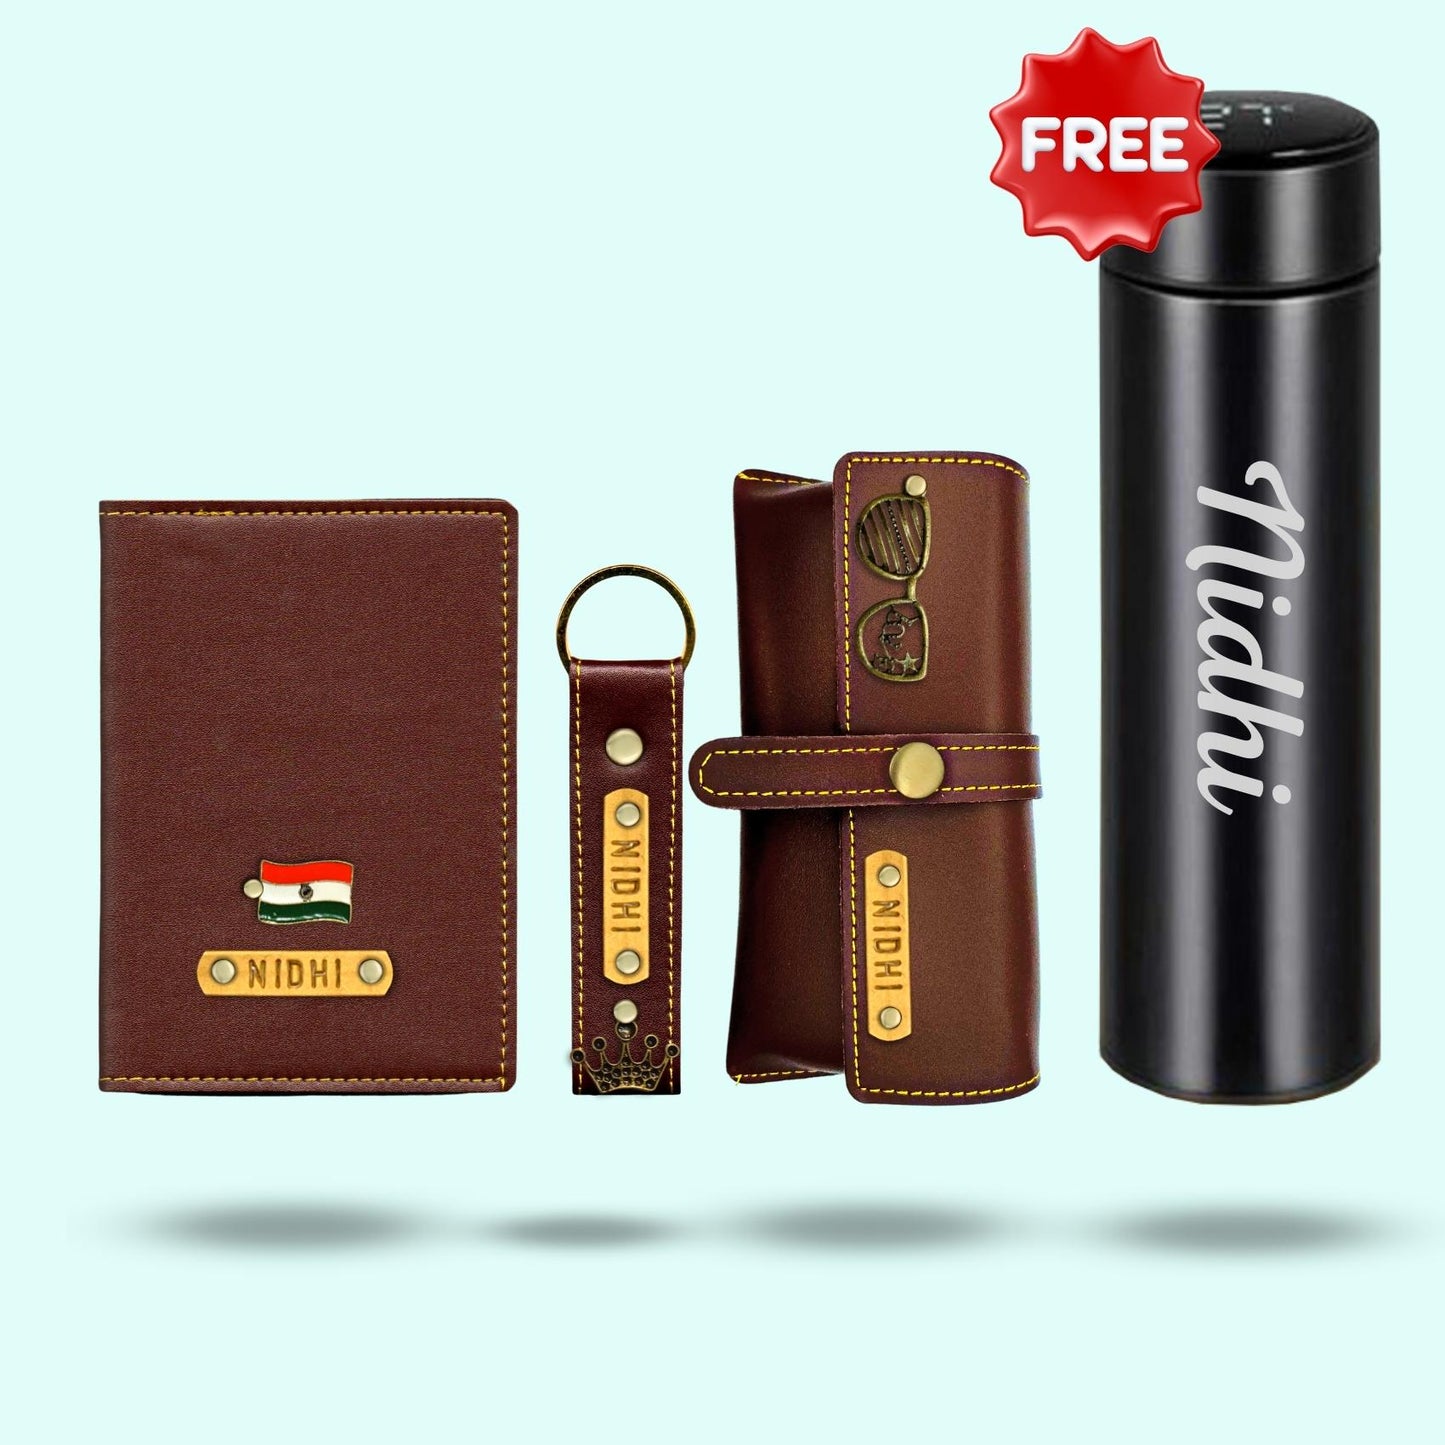 Unisex Personalized Gift Set Hamper 4 in 1 - Dark Brown - Includes 1 Free Bottle